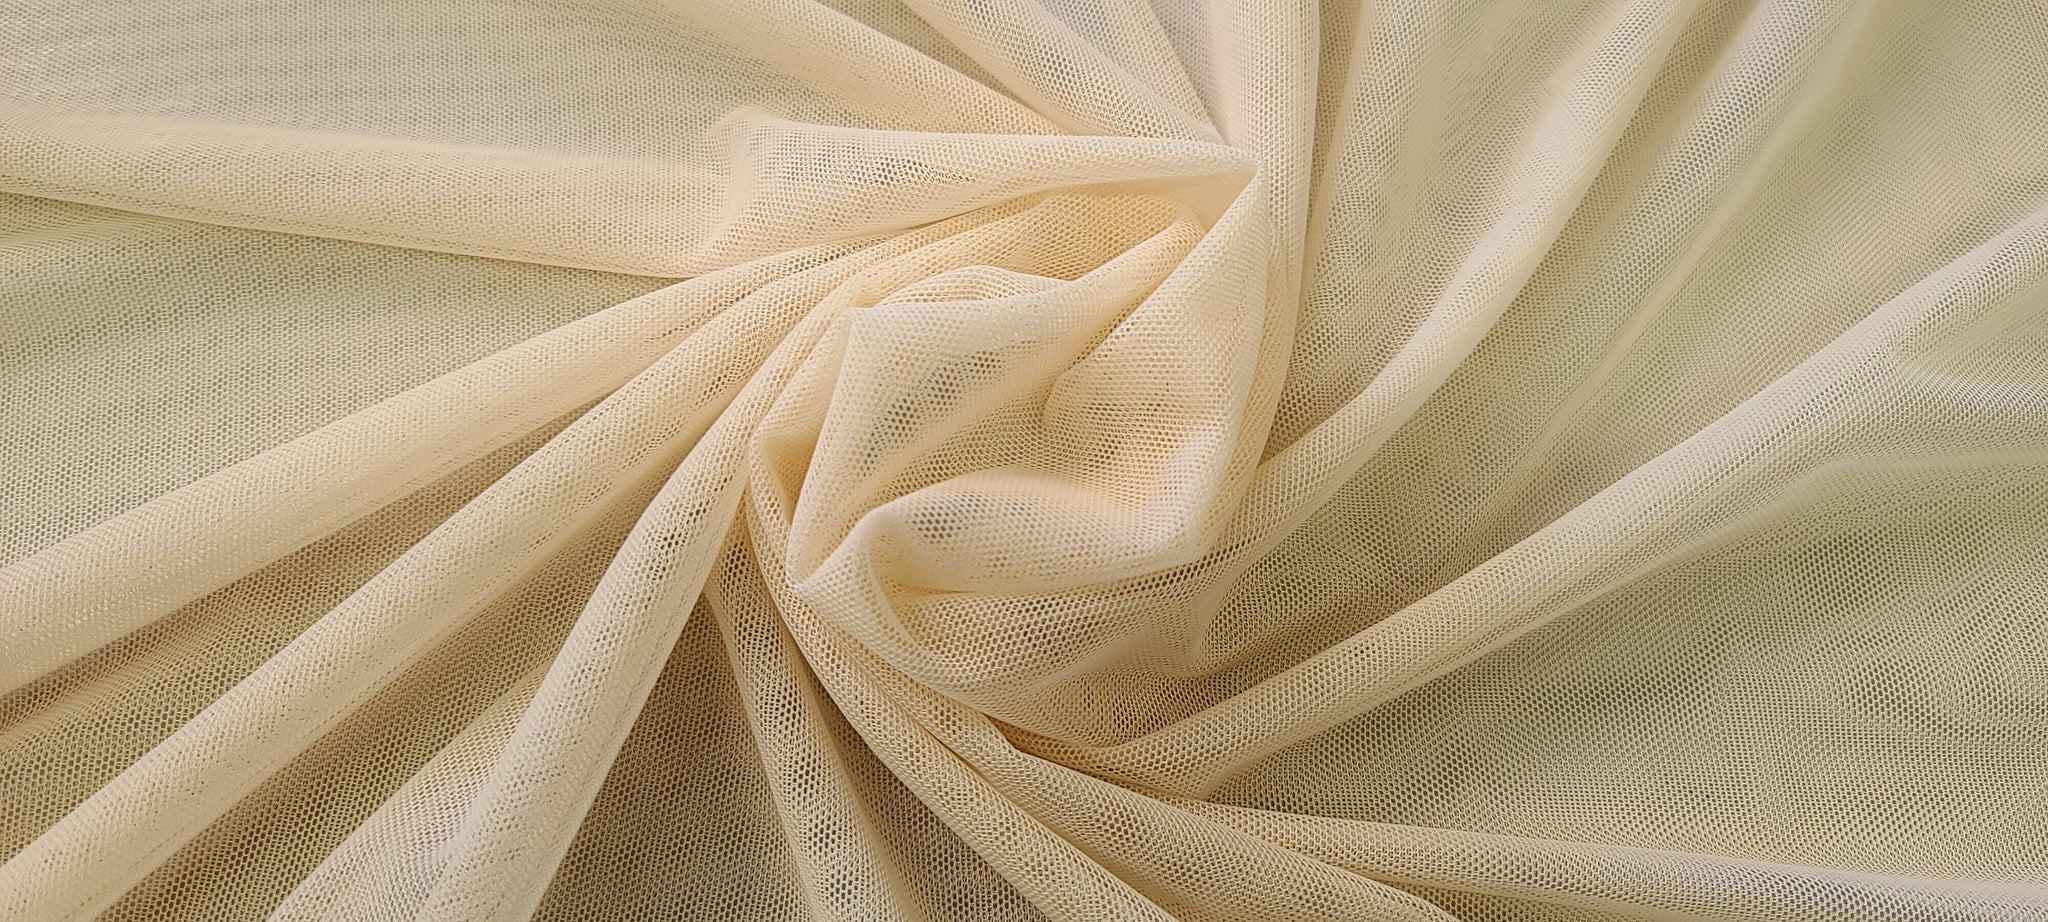 Ivory Nylon Power Mesh Fabric by the Yard, Soft Sheer Drape Mesh Fabric,  Stretch Mesh Fabric, Performance Mesh Fabric Style 454 